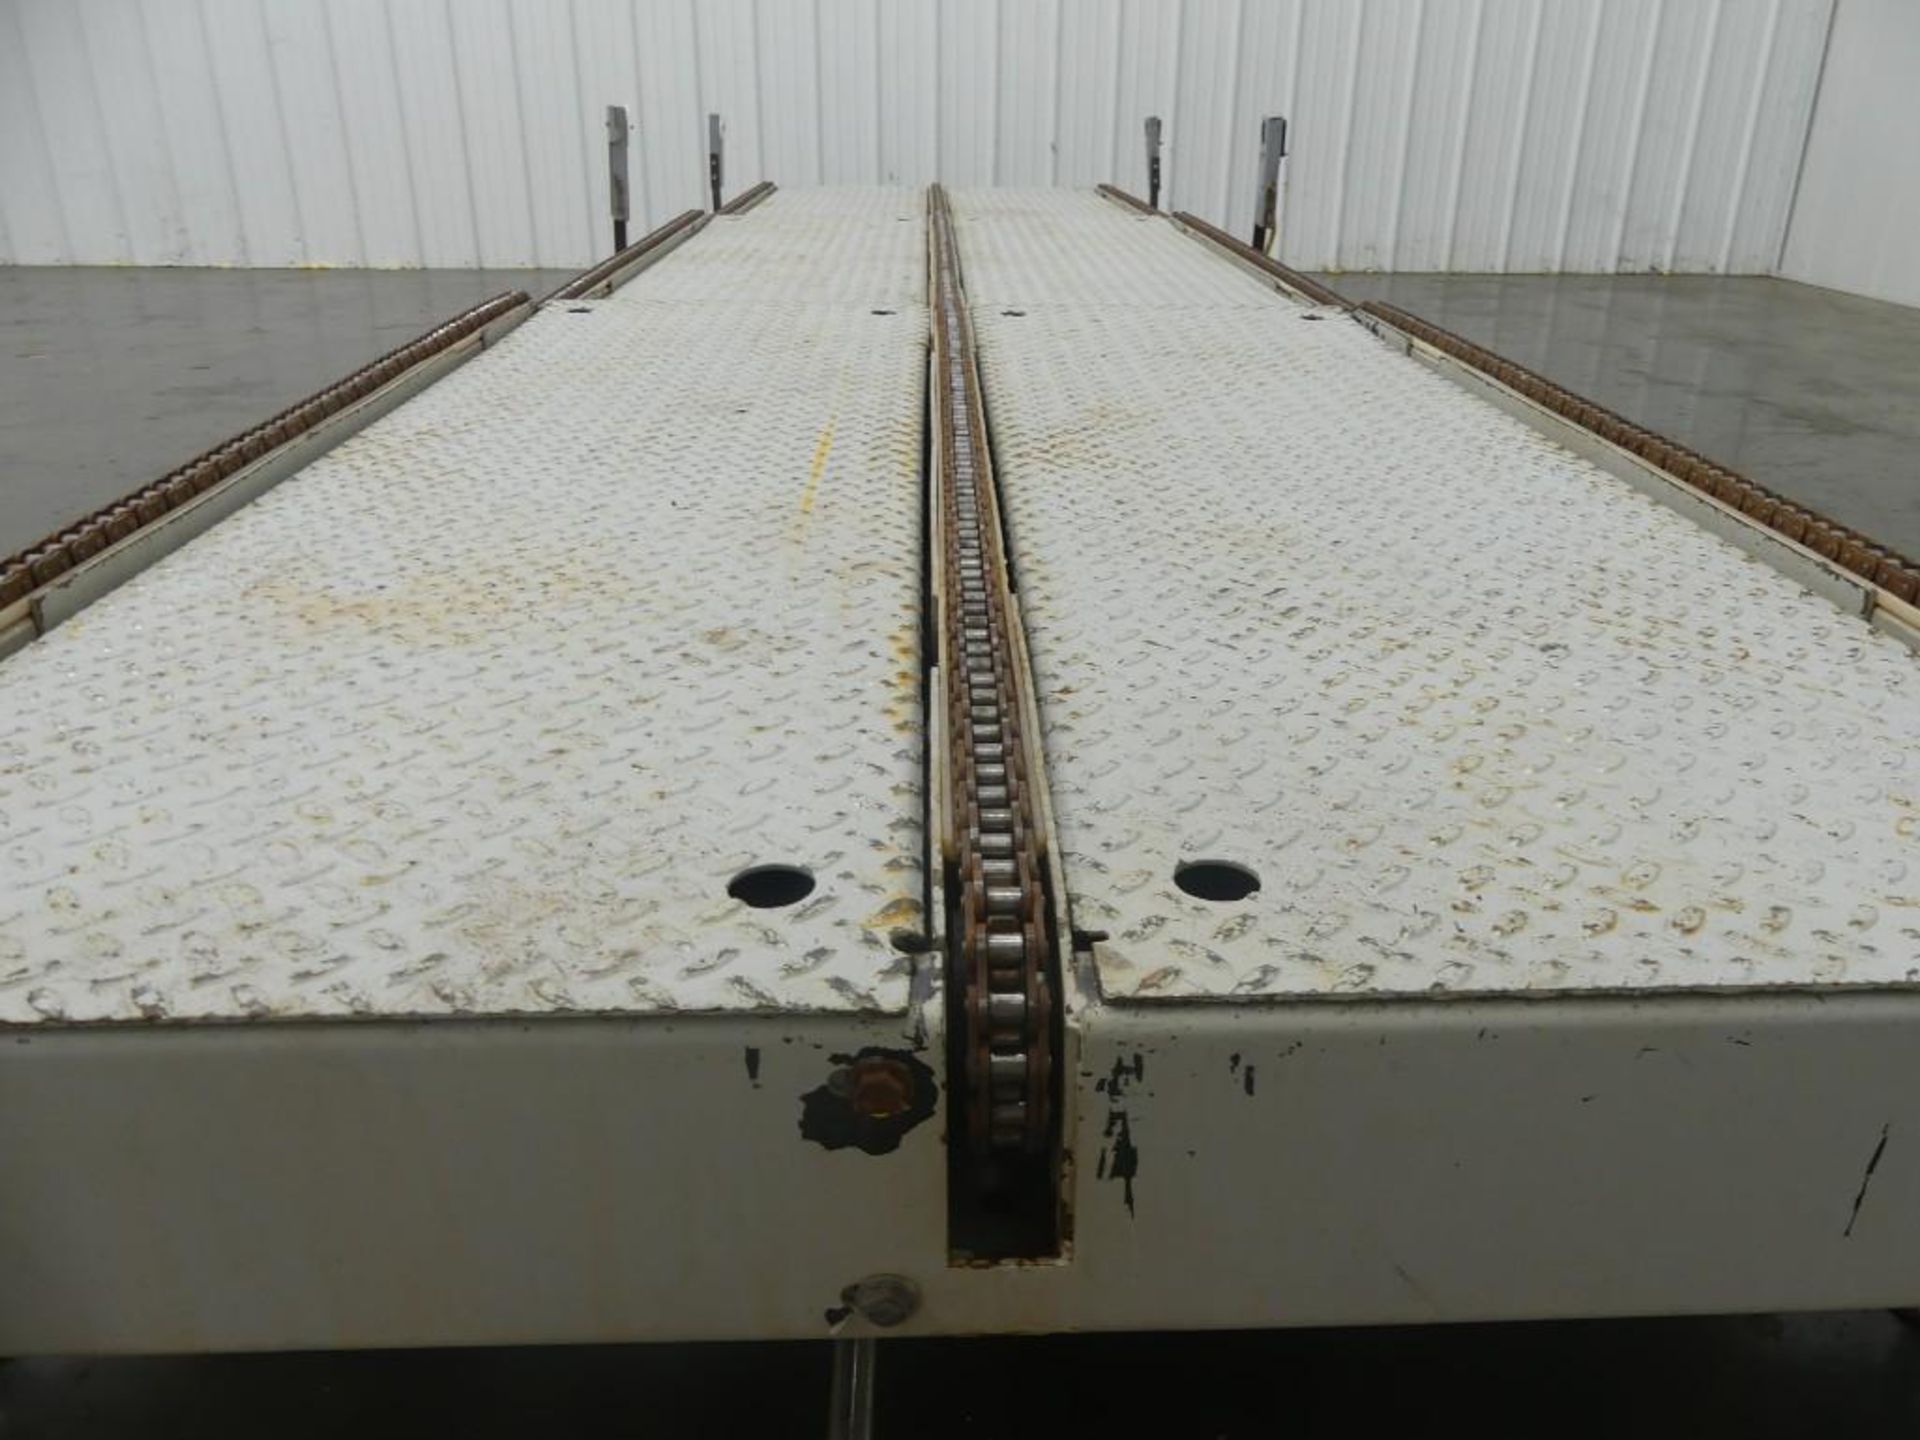 Hytrol Conveyor Pallet Scale System 180" L x 43" W - Image 8 of 20